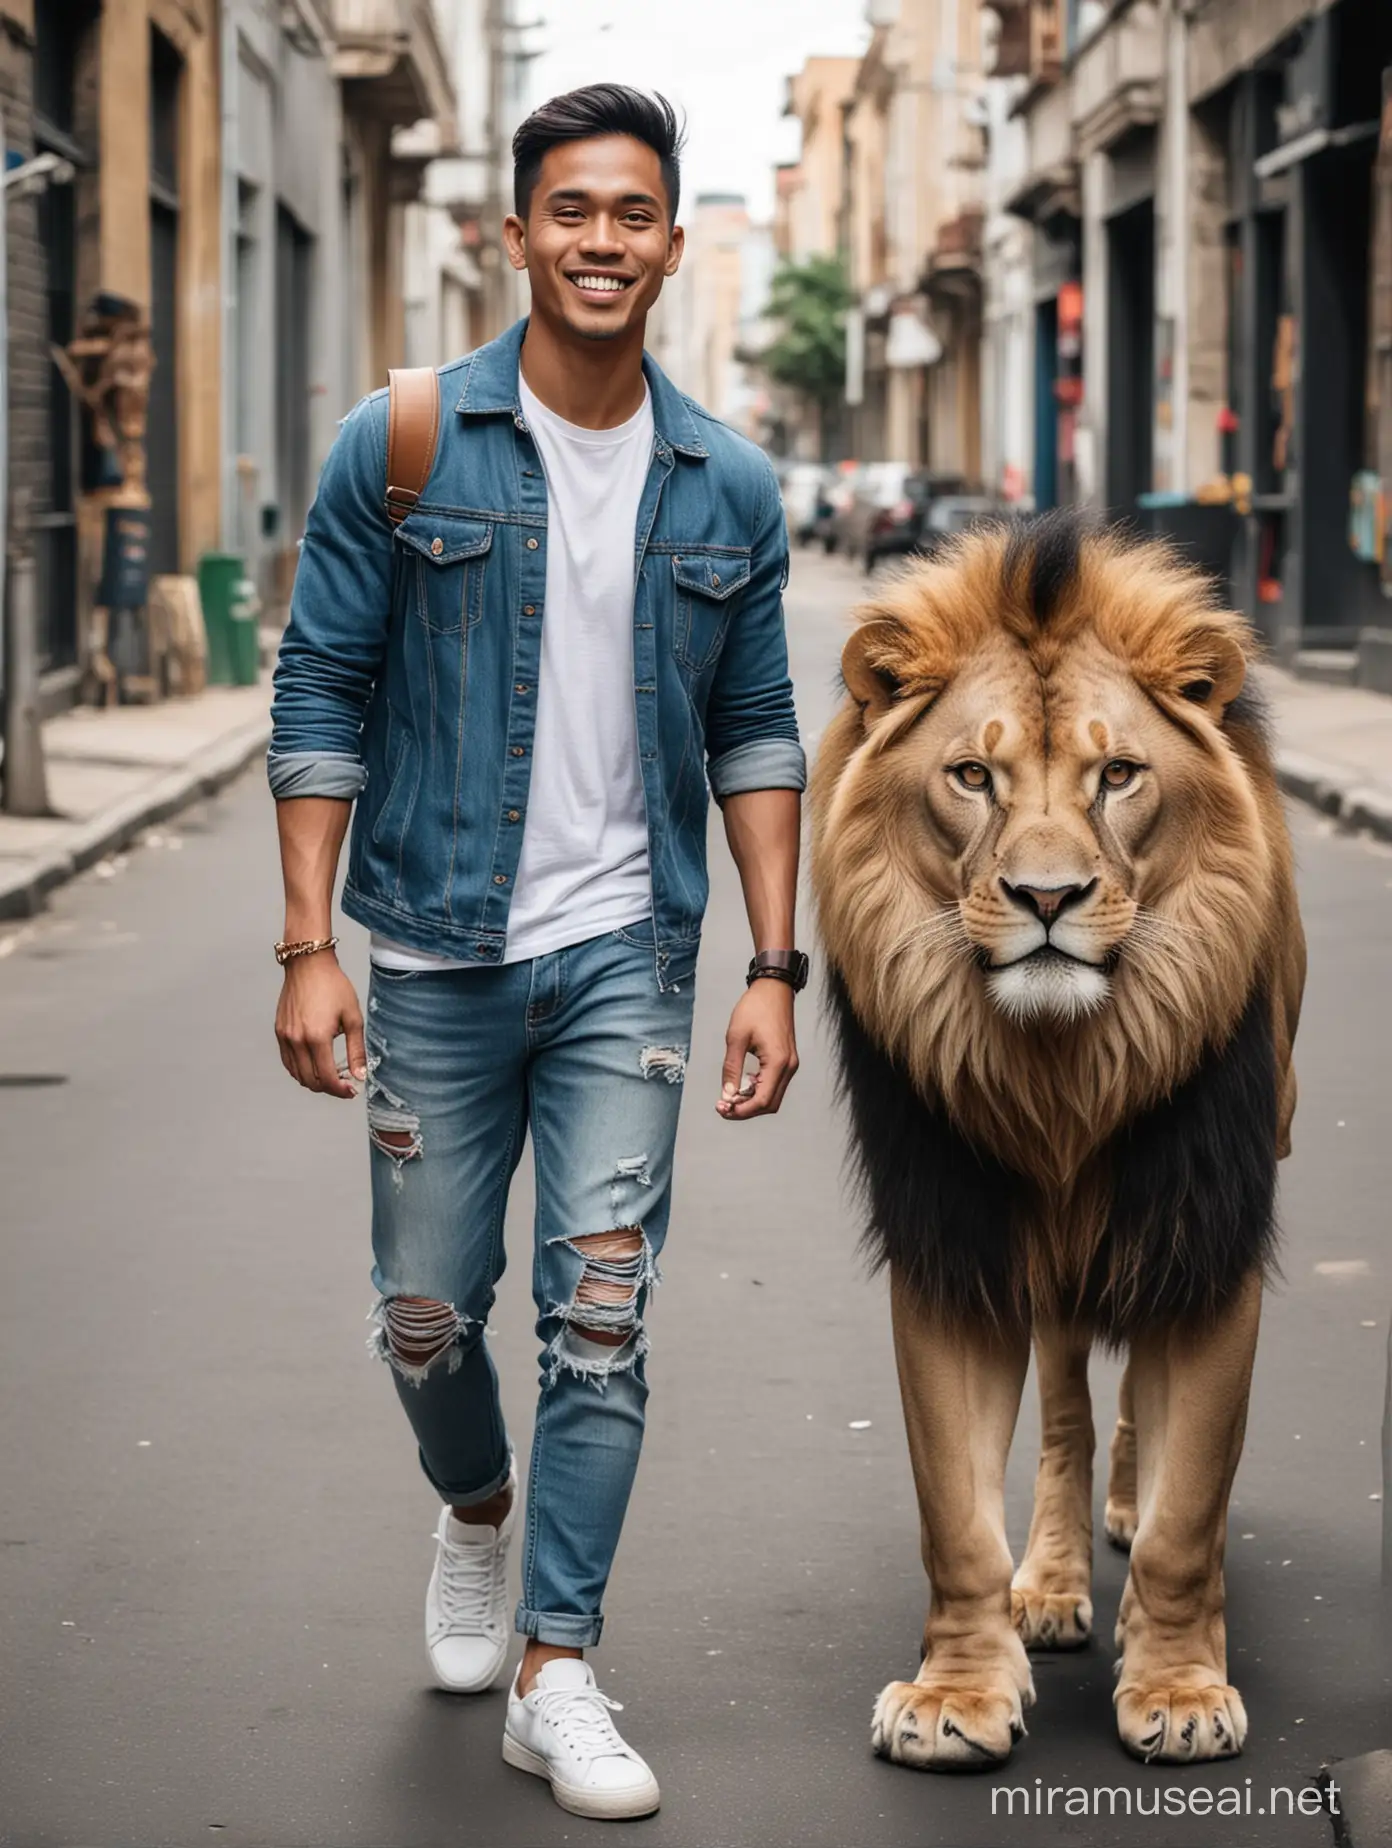 Stylish Indonesian Man Walking with Lion in Urban Setting